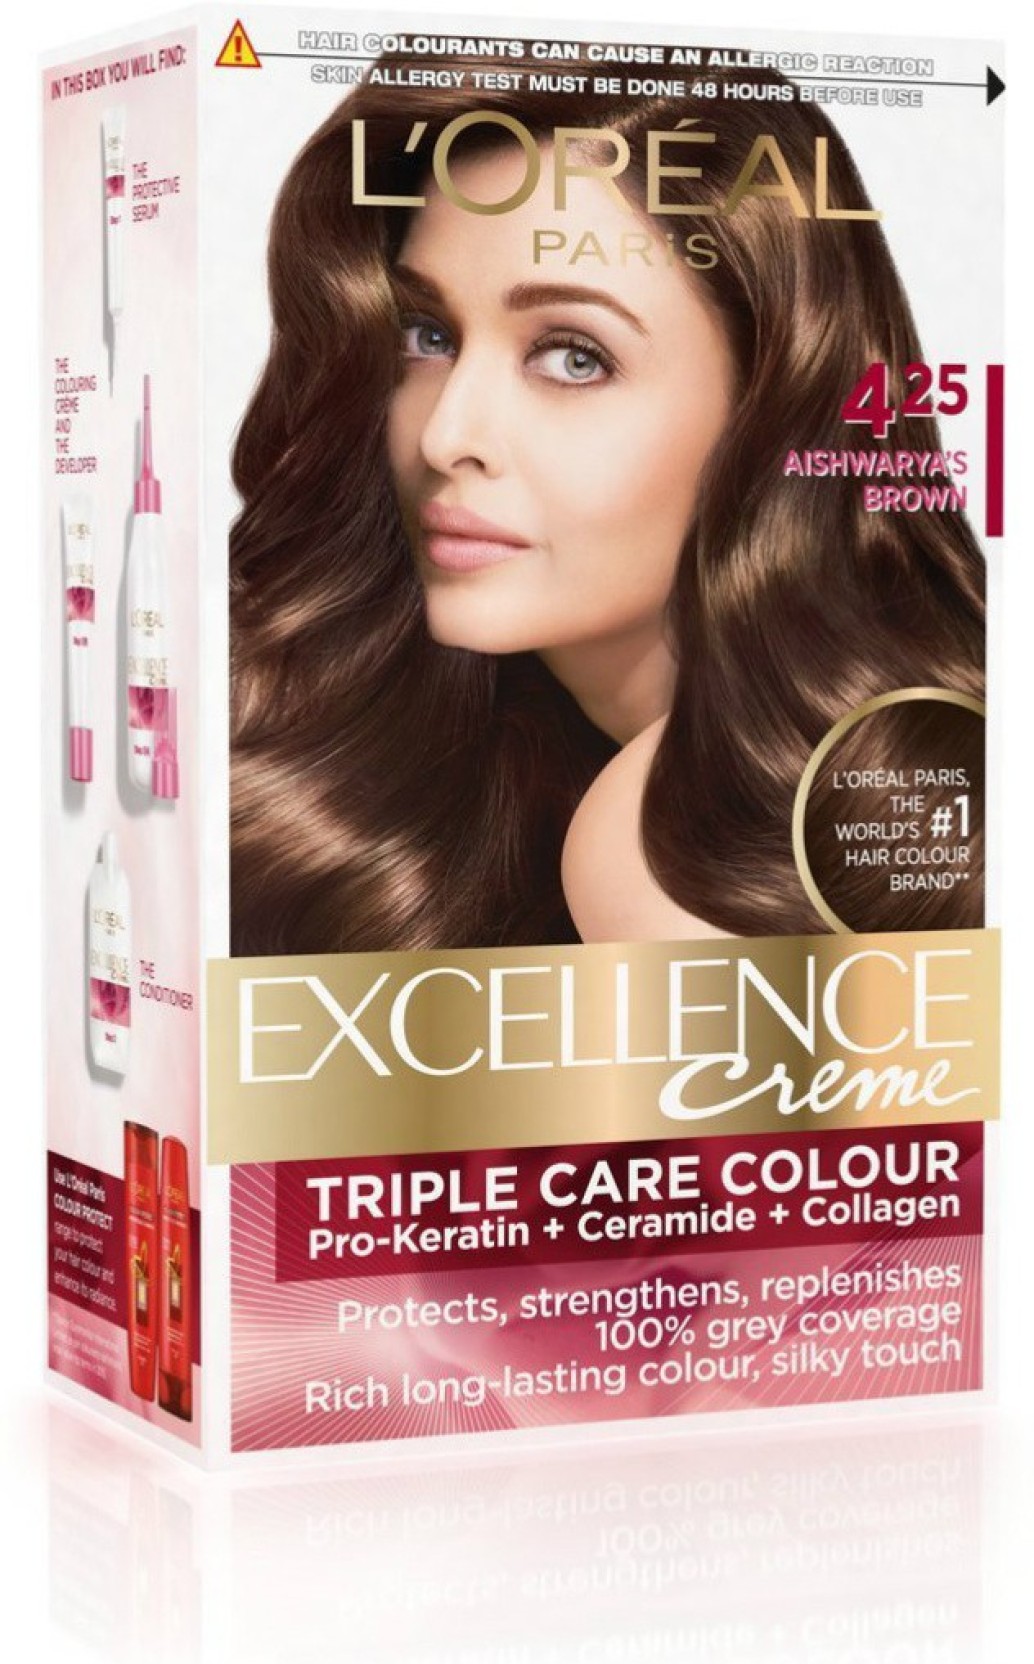 Loreal Burgundy Brown Hair Color - The Best Dark Brown Hair Color Chart